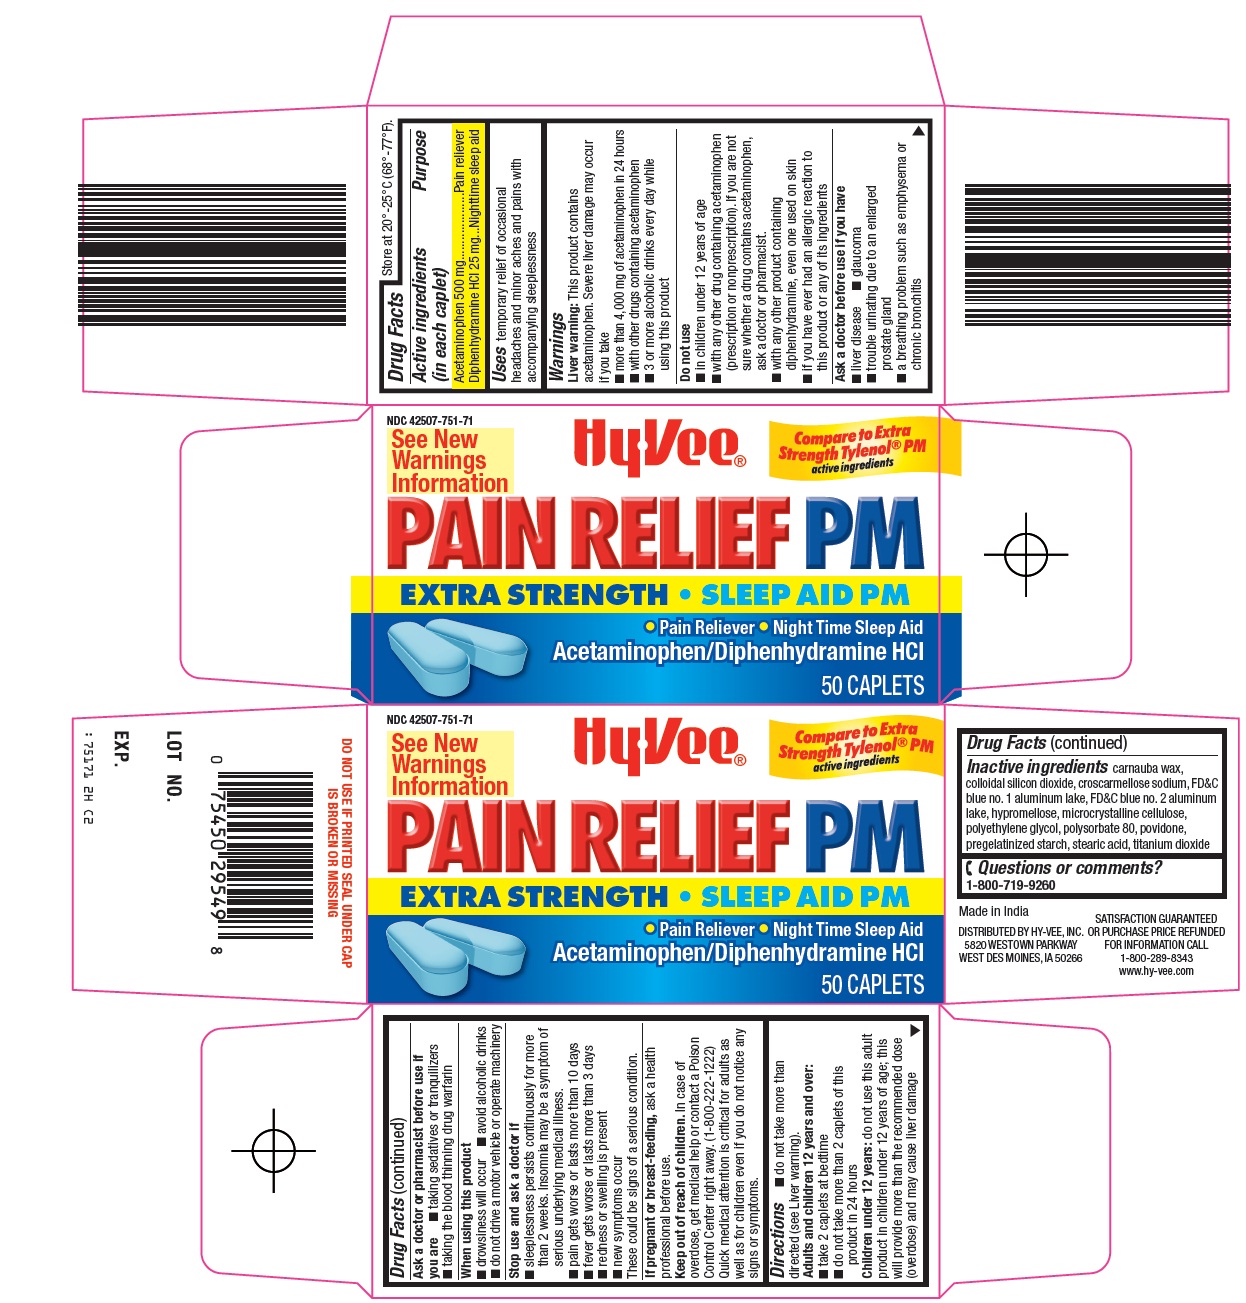 HyVee Pain Relief PM Carton Image